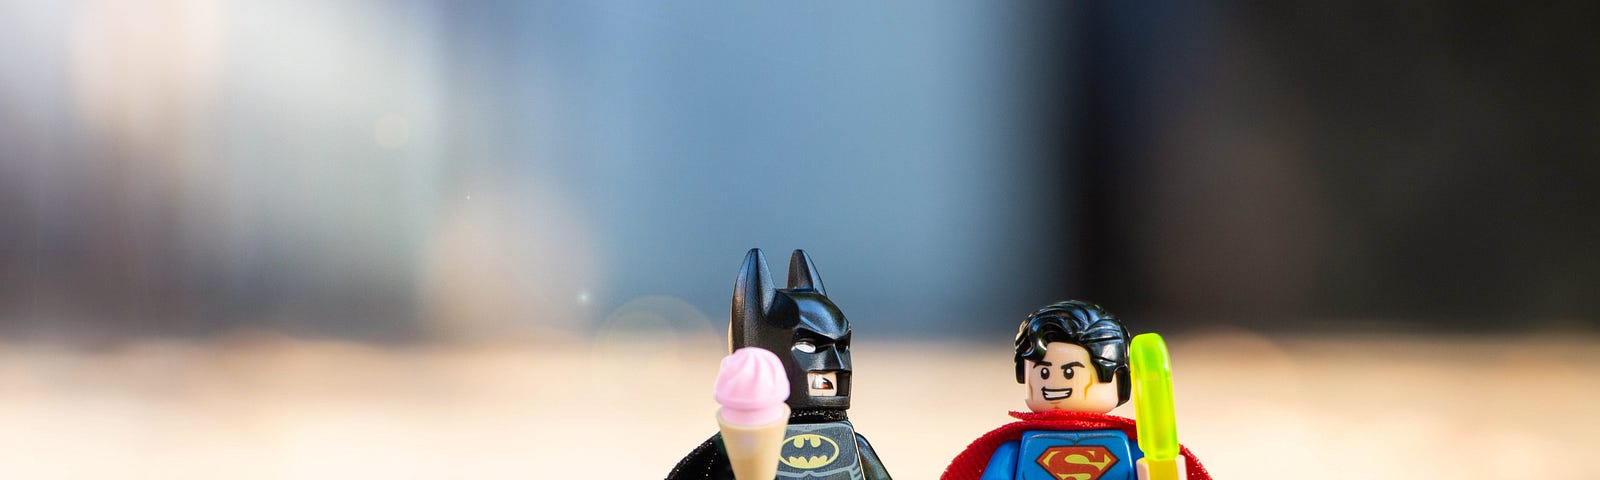 LEGO Superman and Batman eating ice cream together.